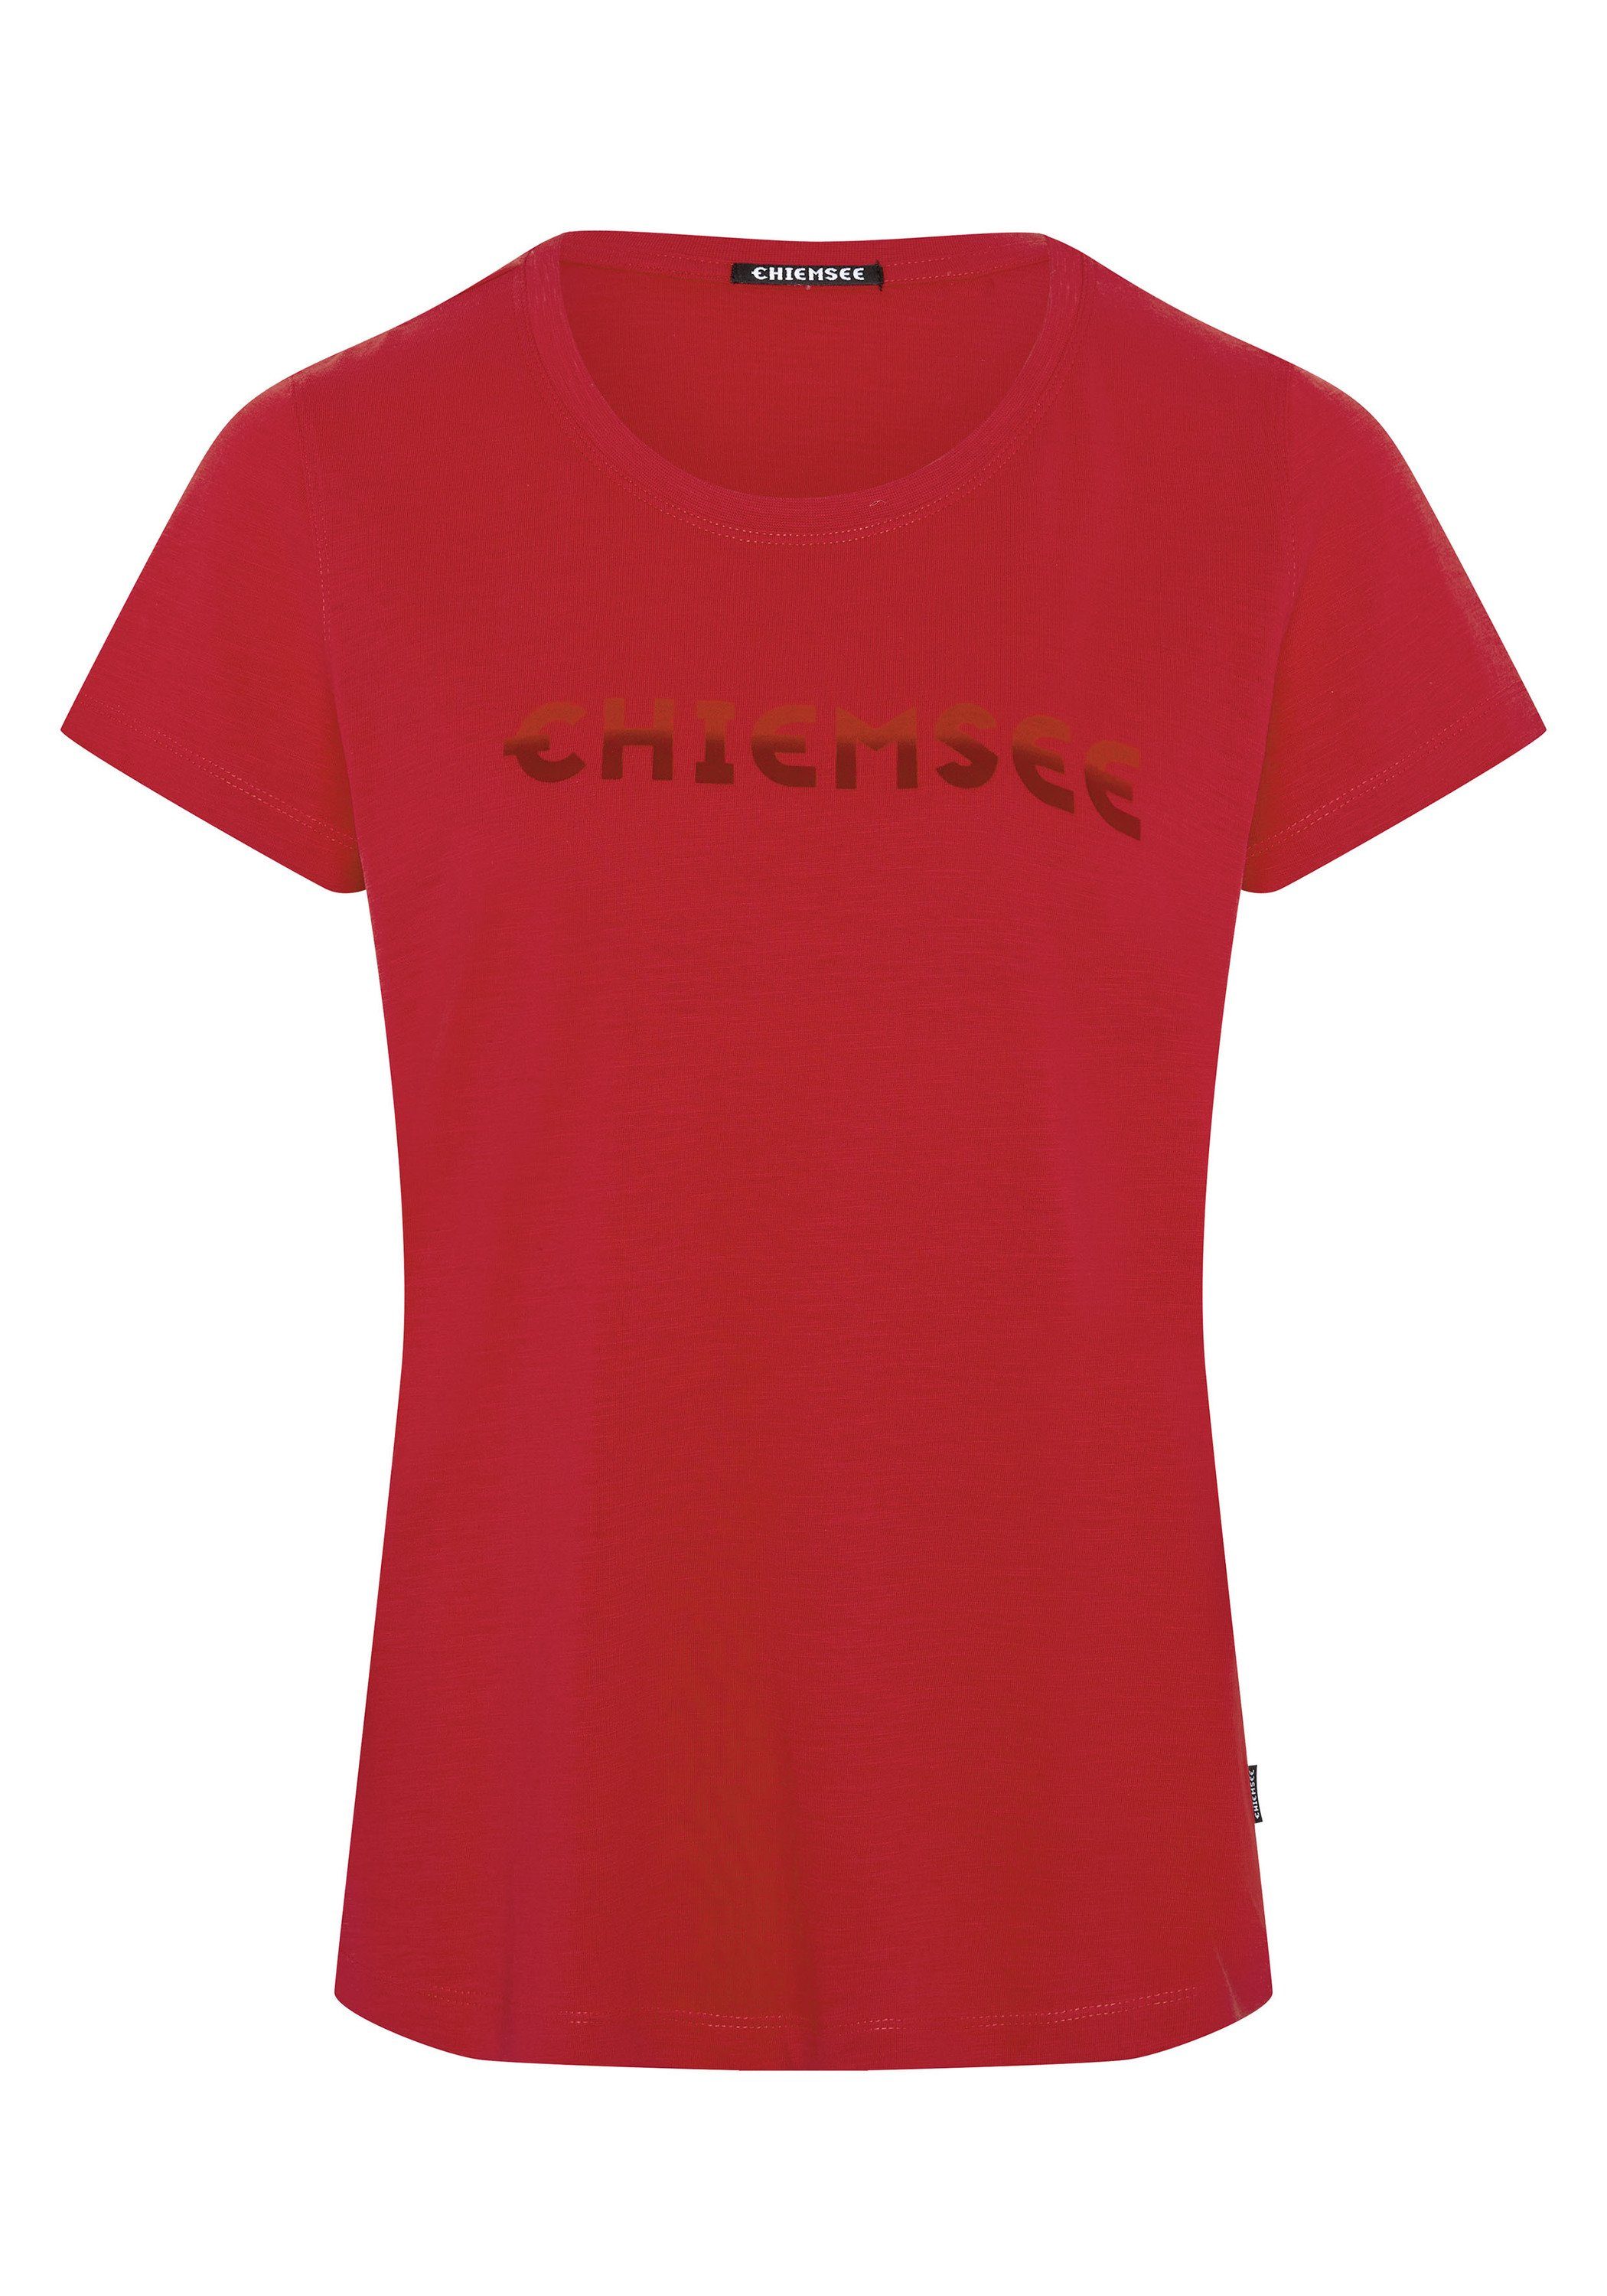 Chiemsee Print-Shirt T-Shirt mit Logo in Farbverlauf-Optik 1 Toreador